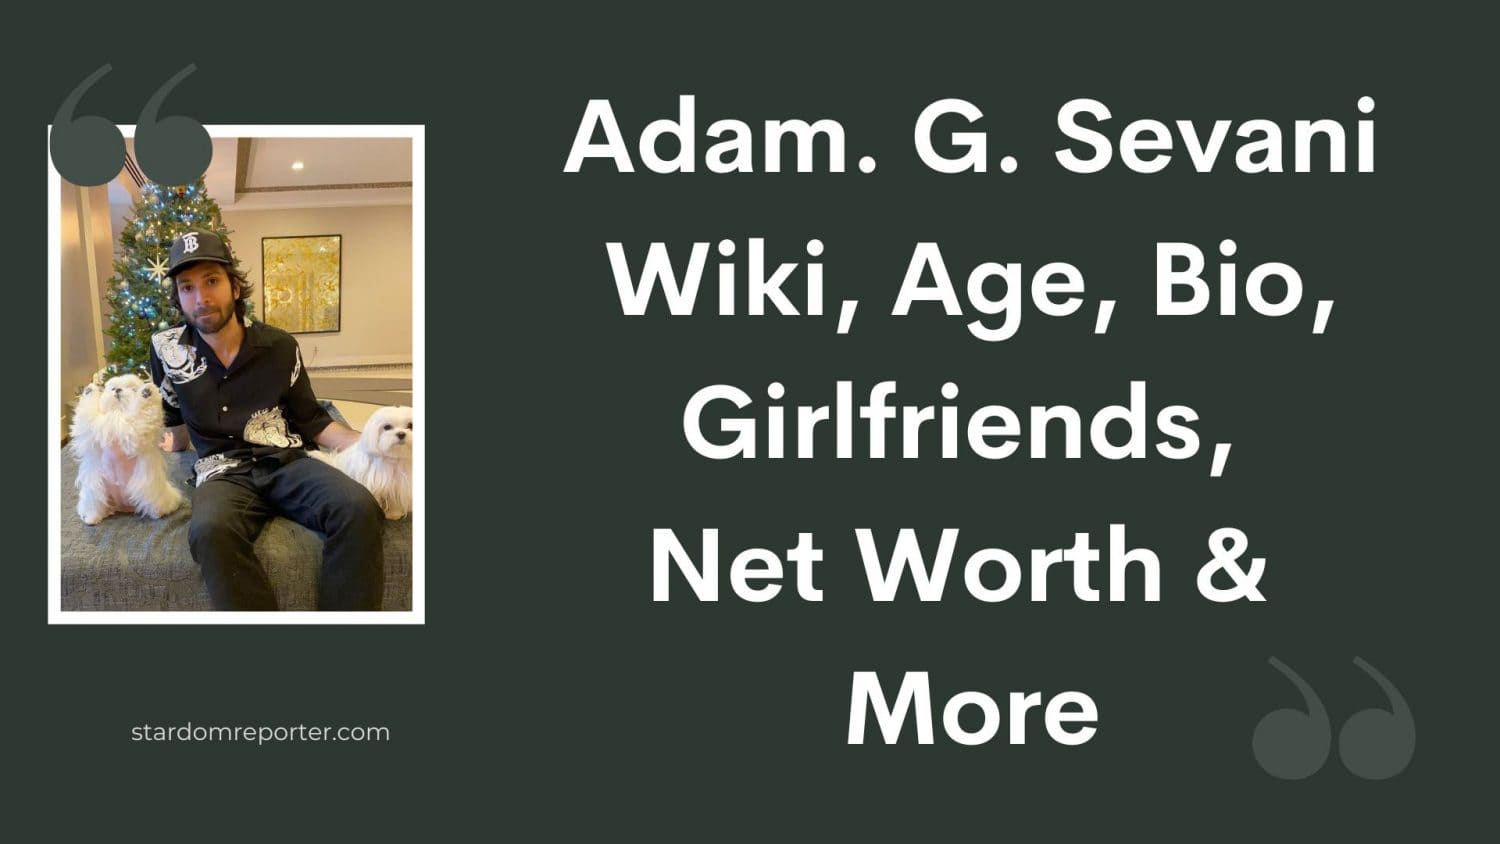 Adam. G. Sevani Wiki, Age, Bio, Girlfriends, Net Worth & More - 17